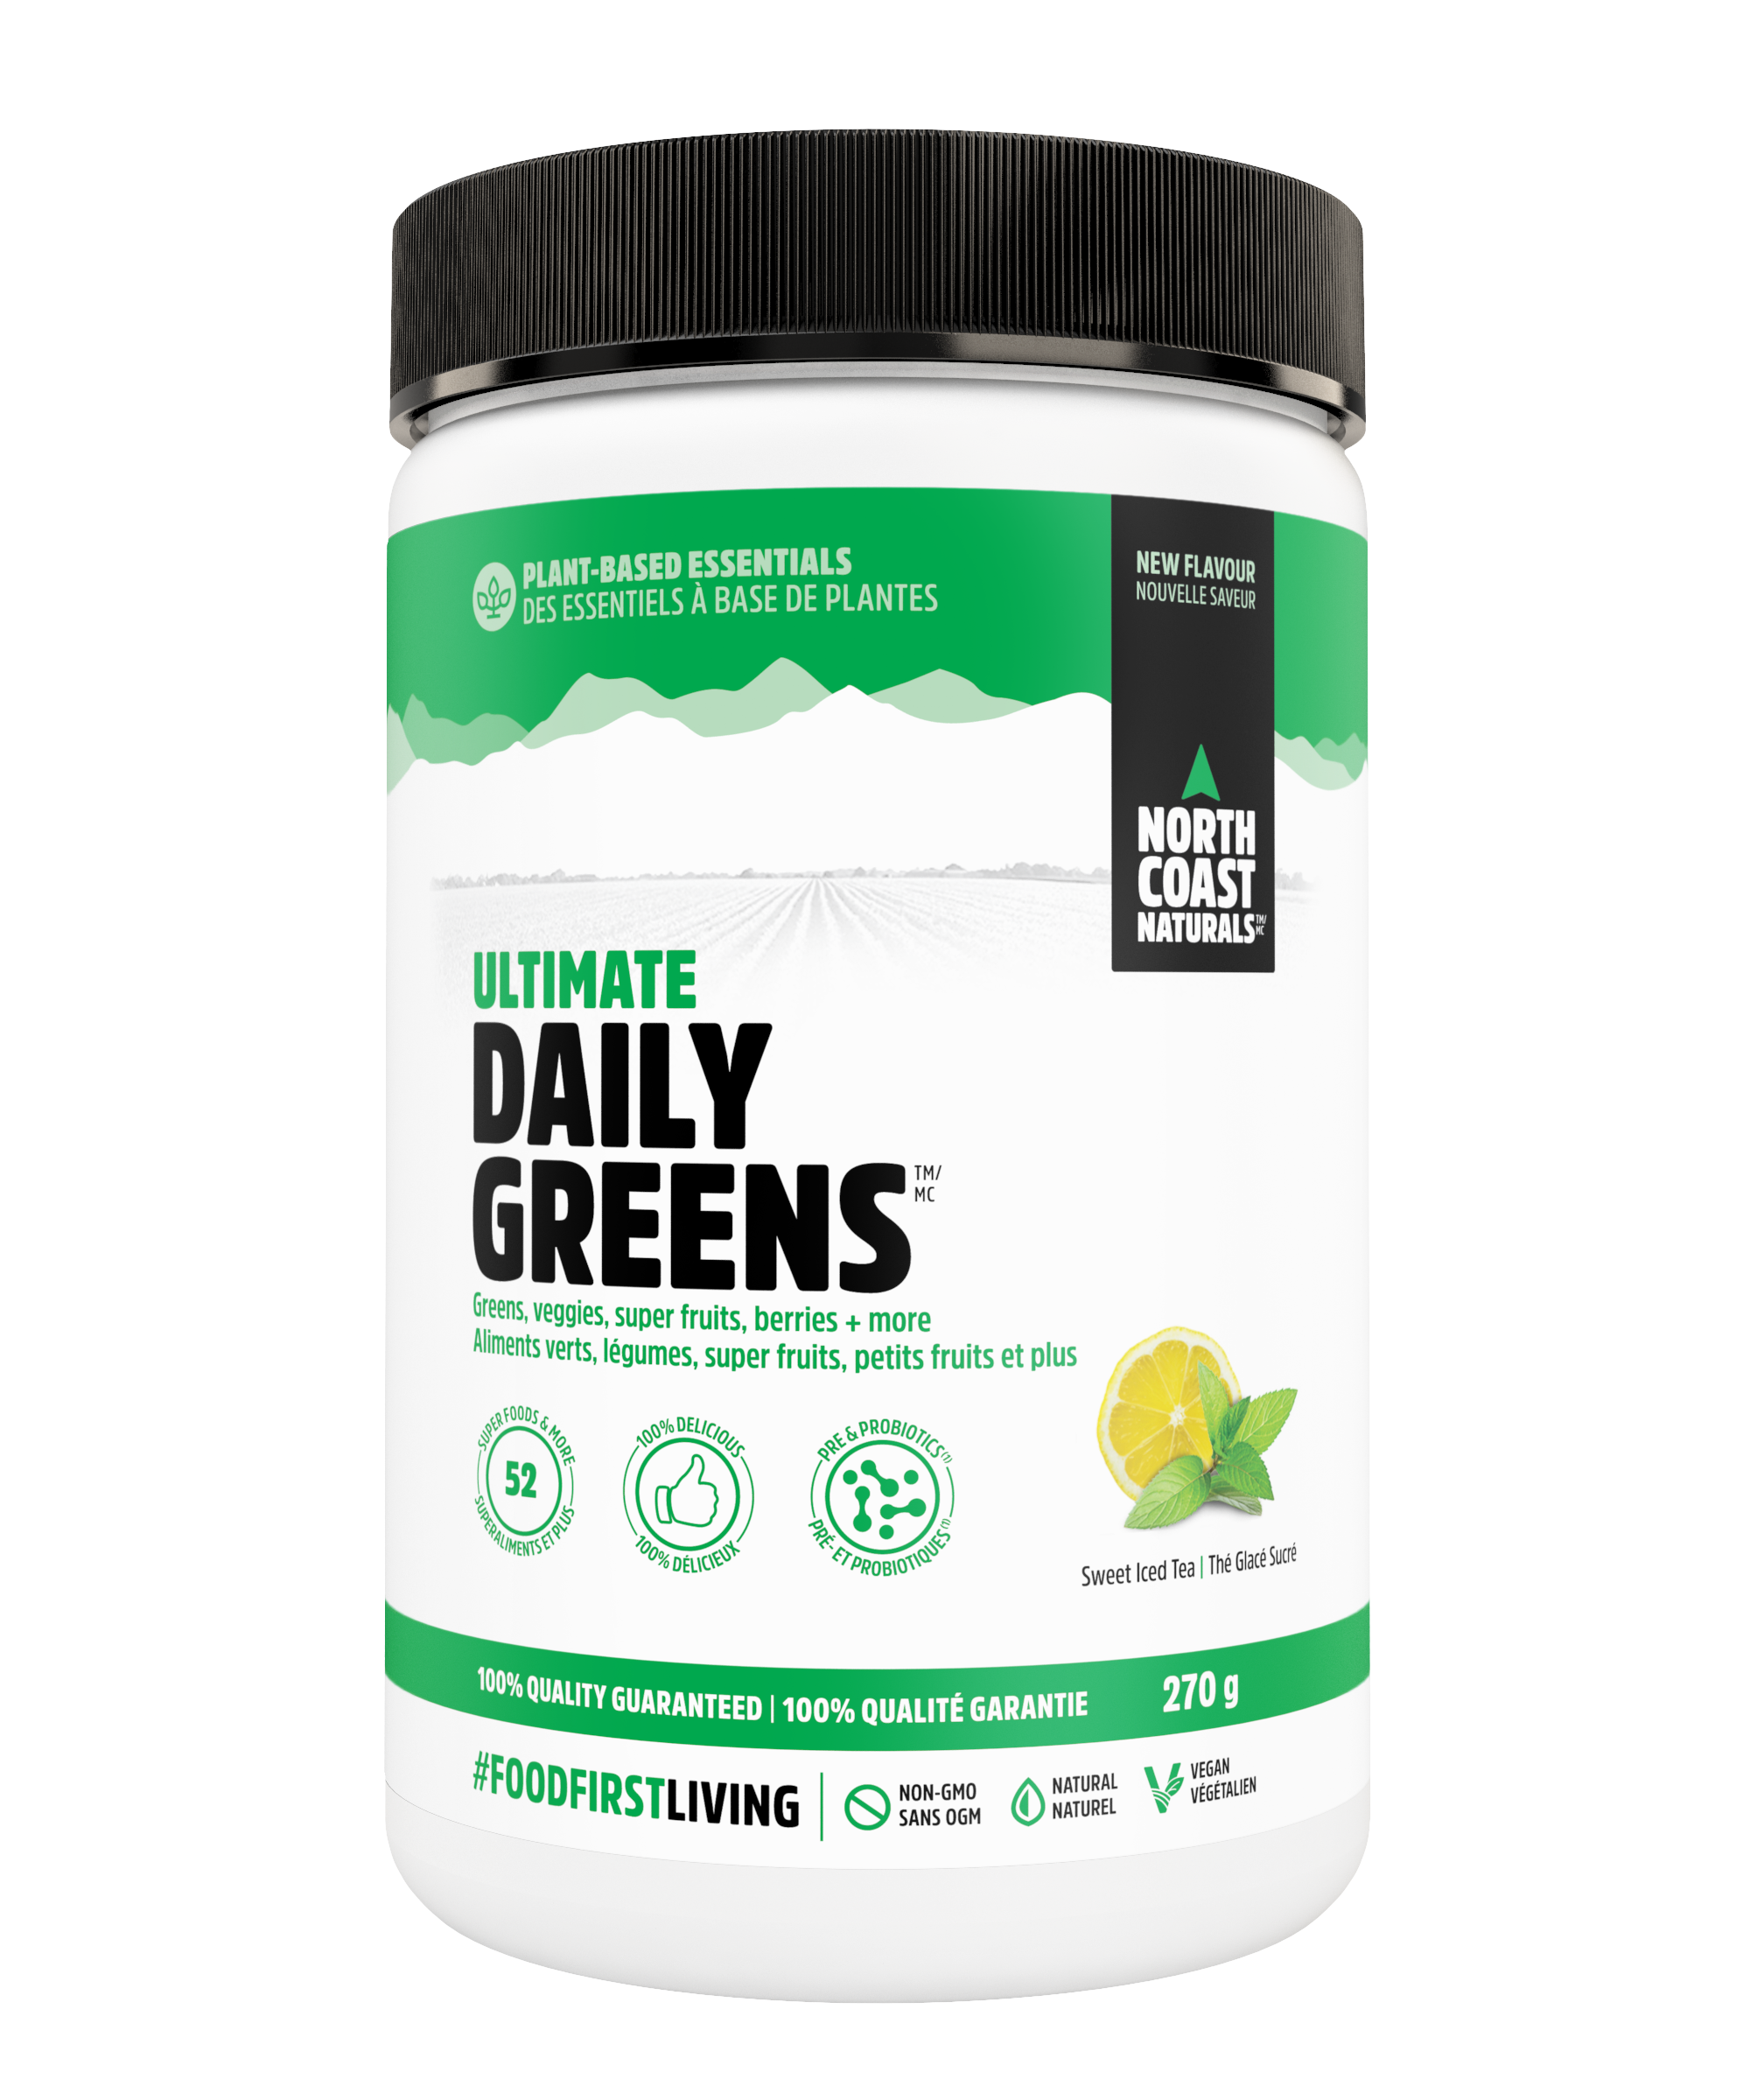 NORTH COAST NATURALS - Ultimate Daily Greens 270 g. (รับฟรี!! PVL Water Bottle 1.0L 1 ใบ เมื่อซื้อเฉพาะรส Sweet Ice Tea หรือ Chocolate)